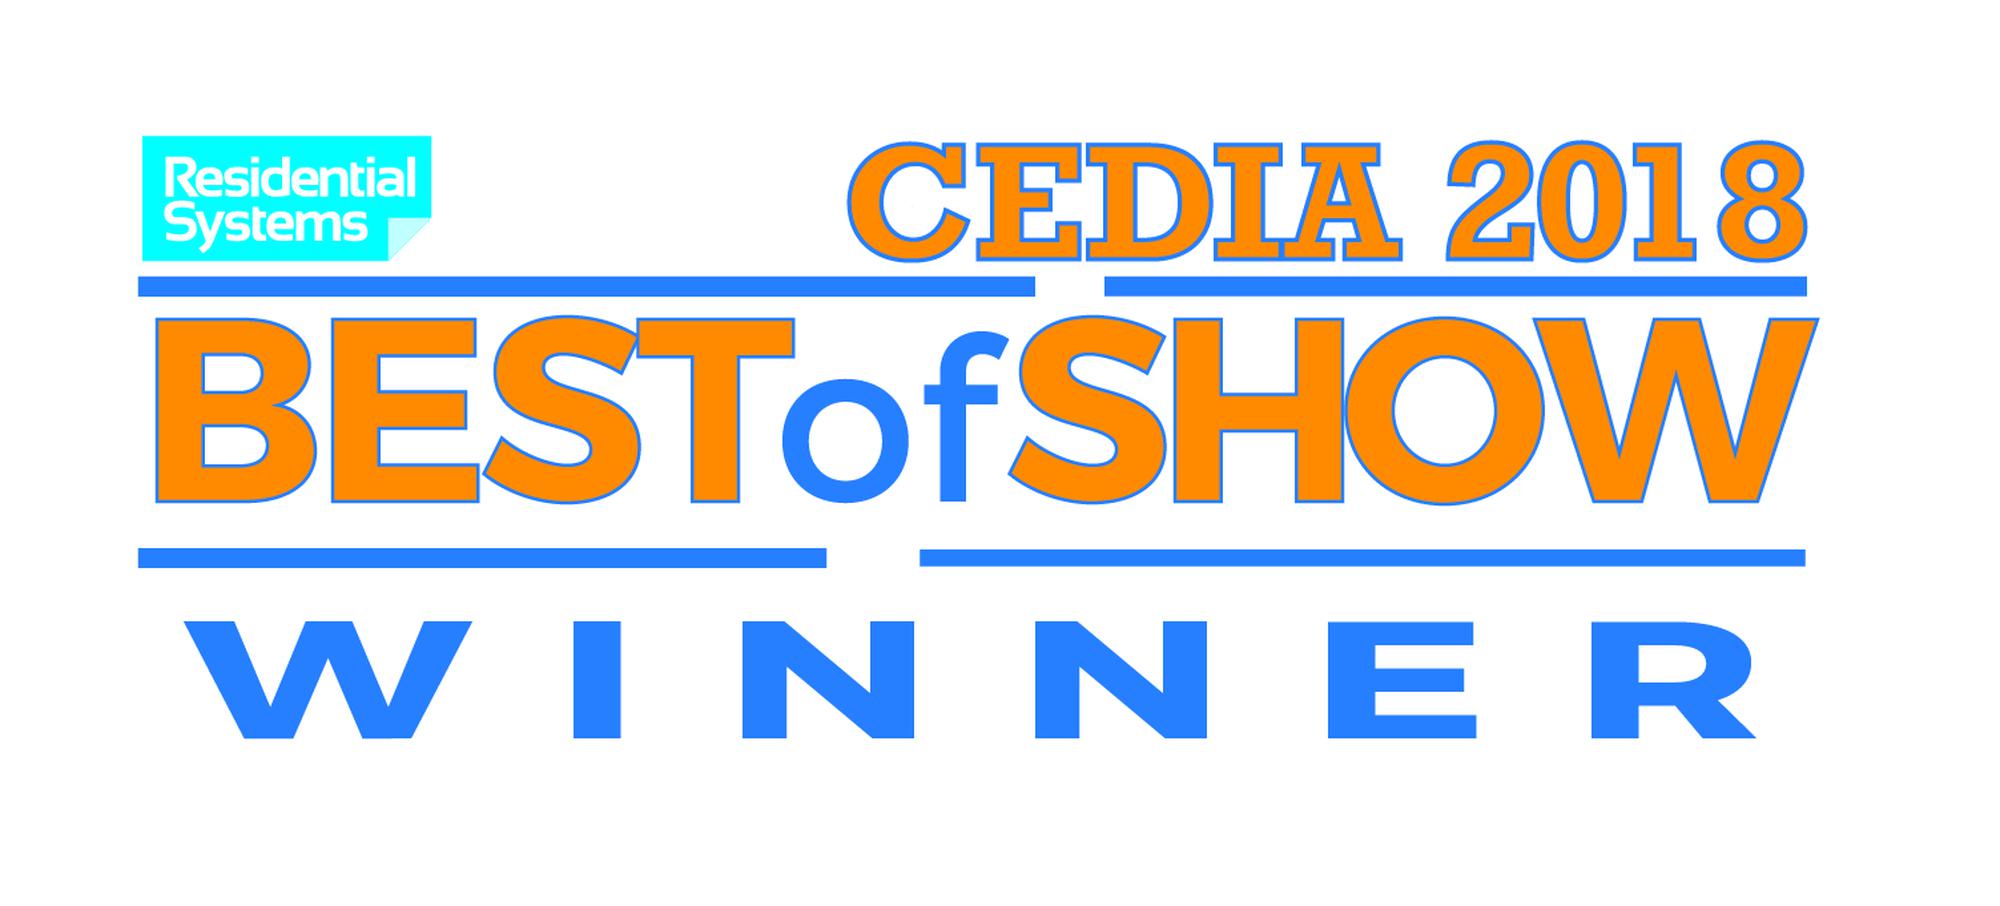 CEDIA 2018 Best of Show Winner